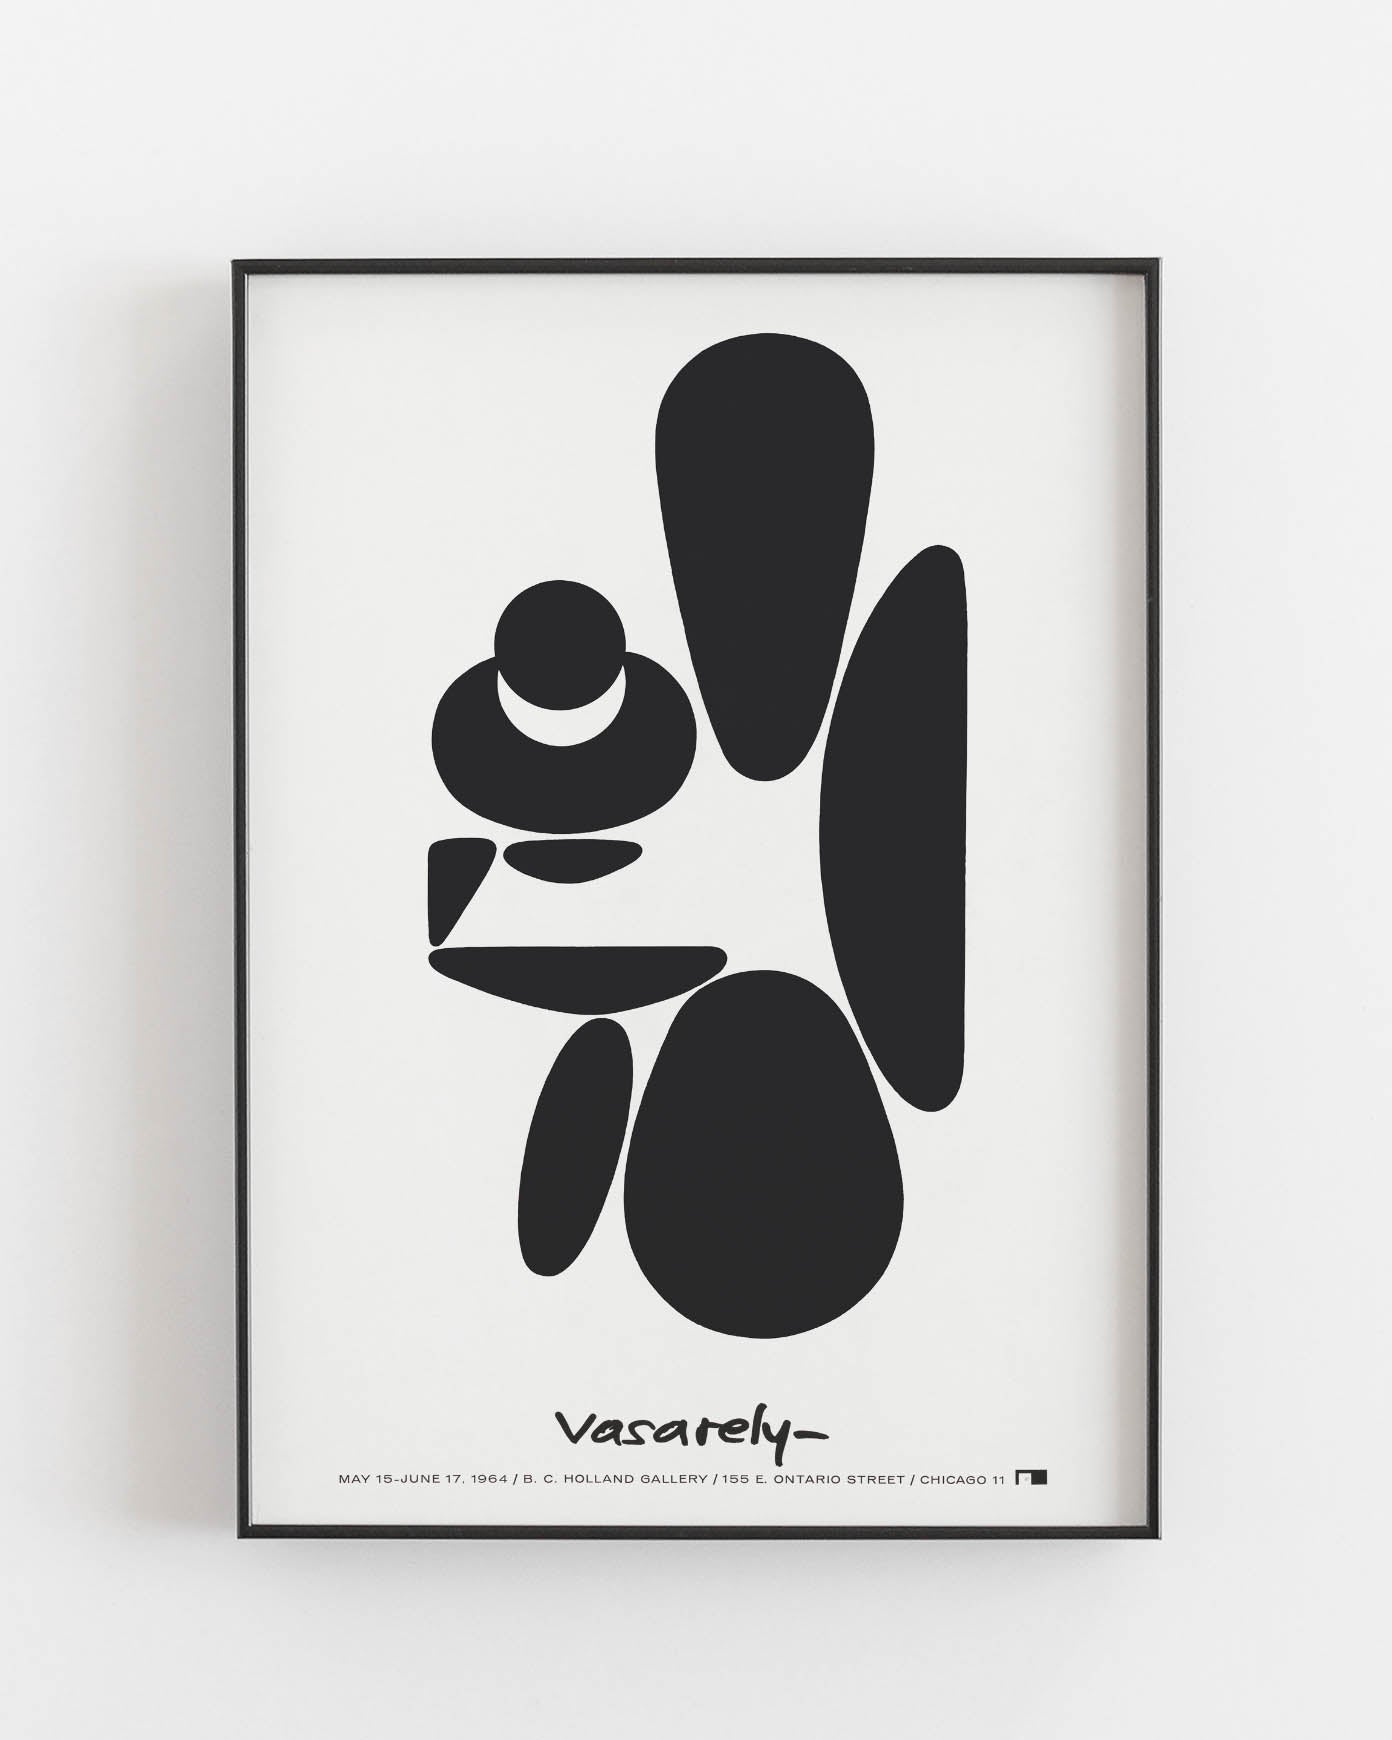 Victor Vasarely 1964 exhibition poster